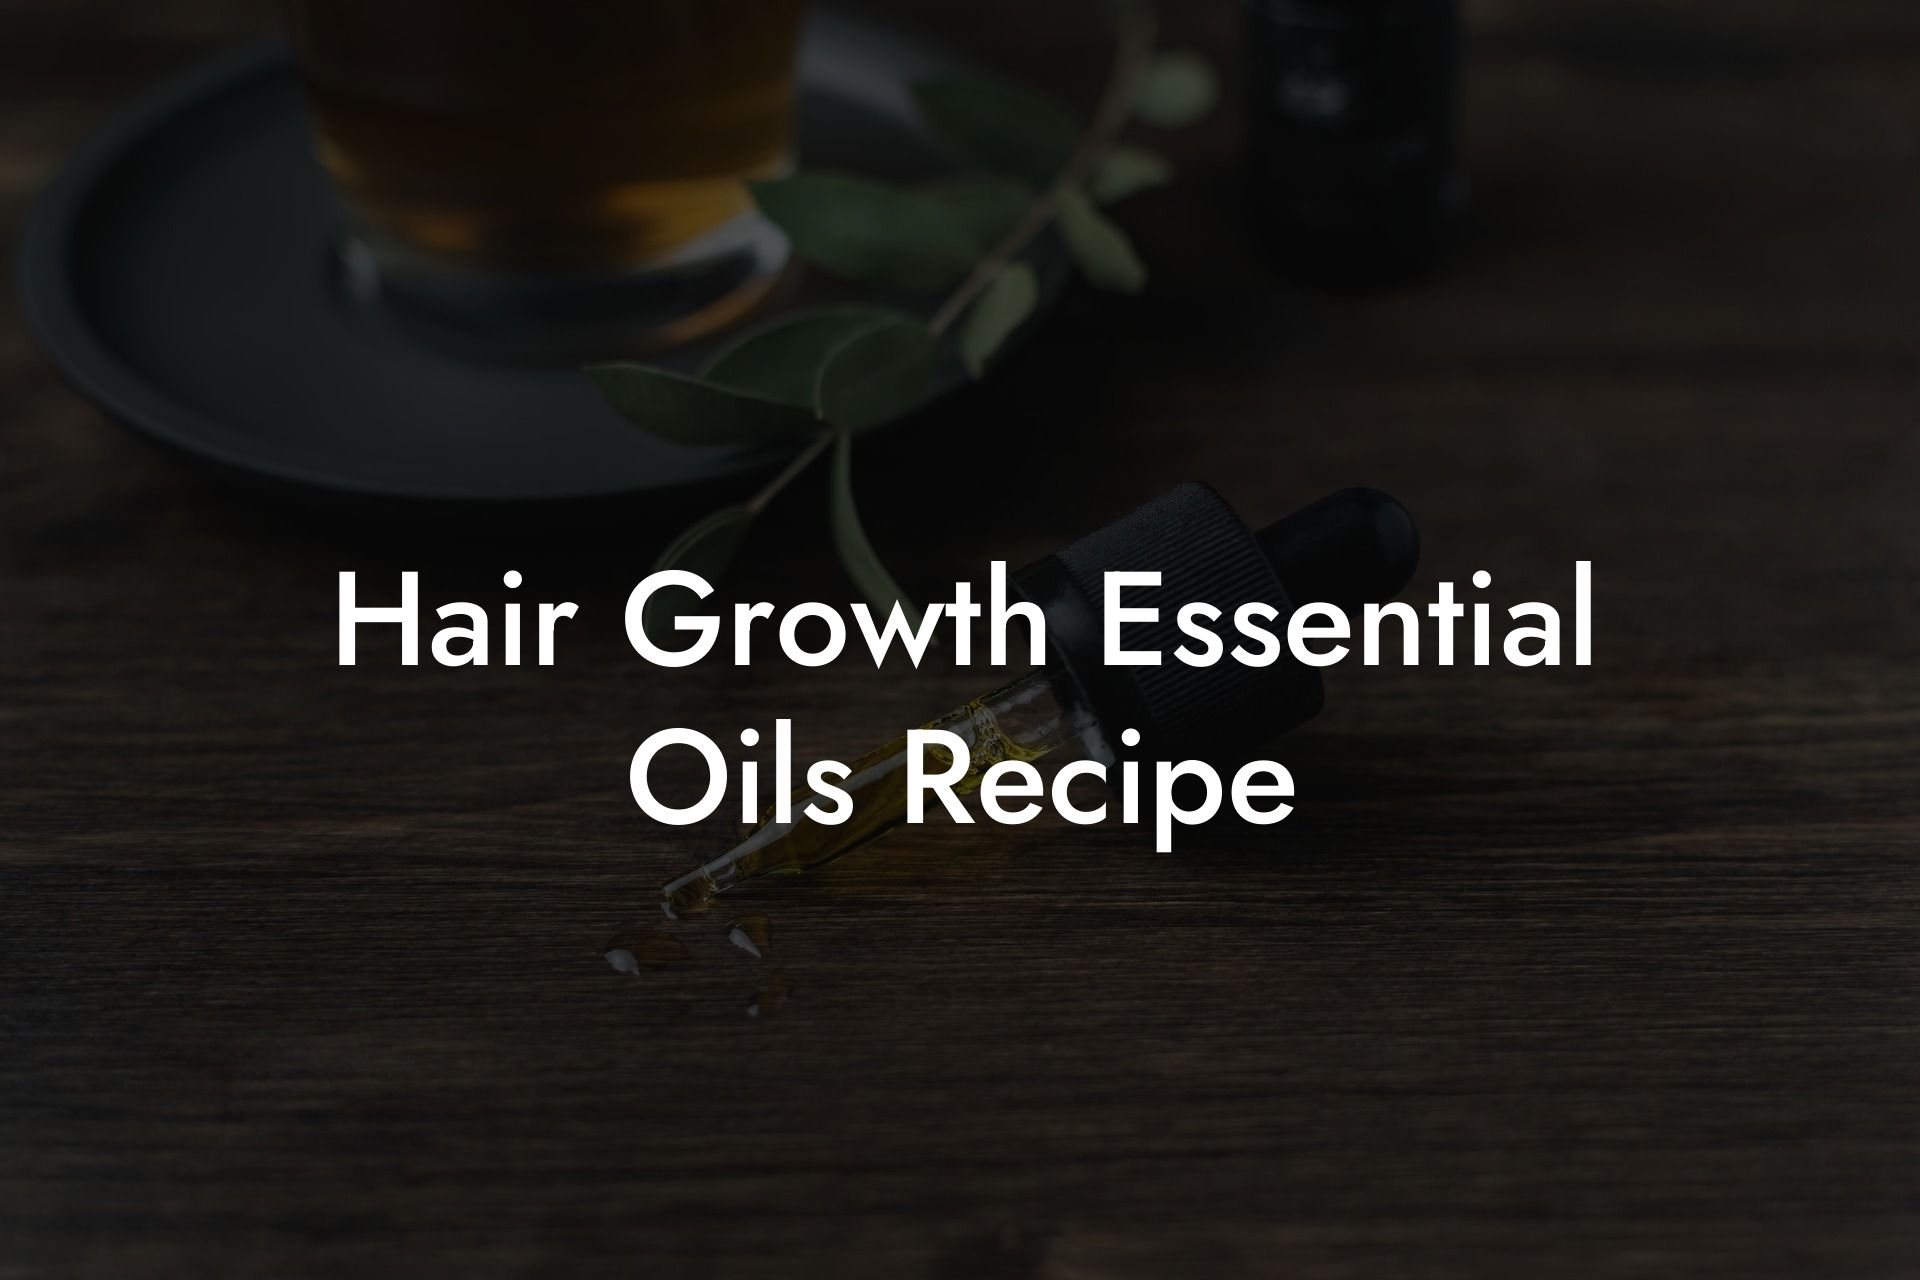 Hair Growth Essential Oils Recipe